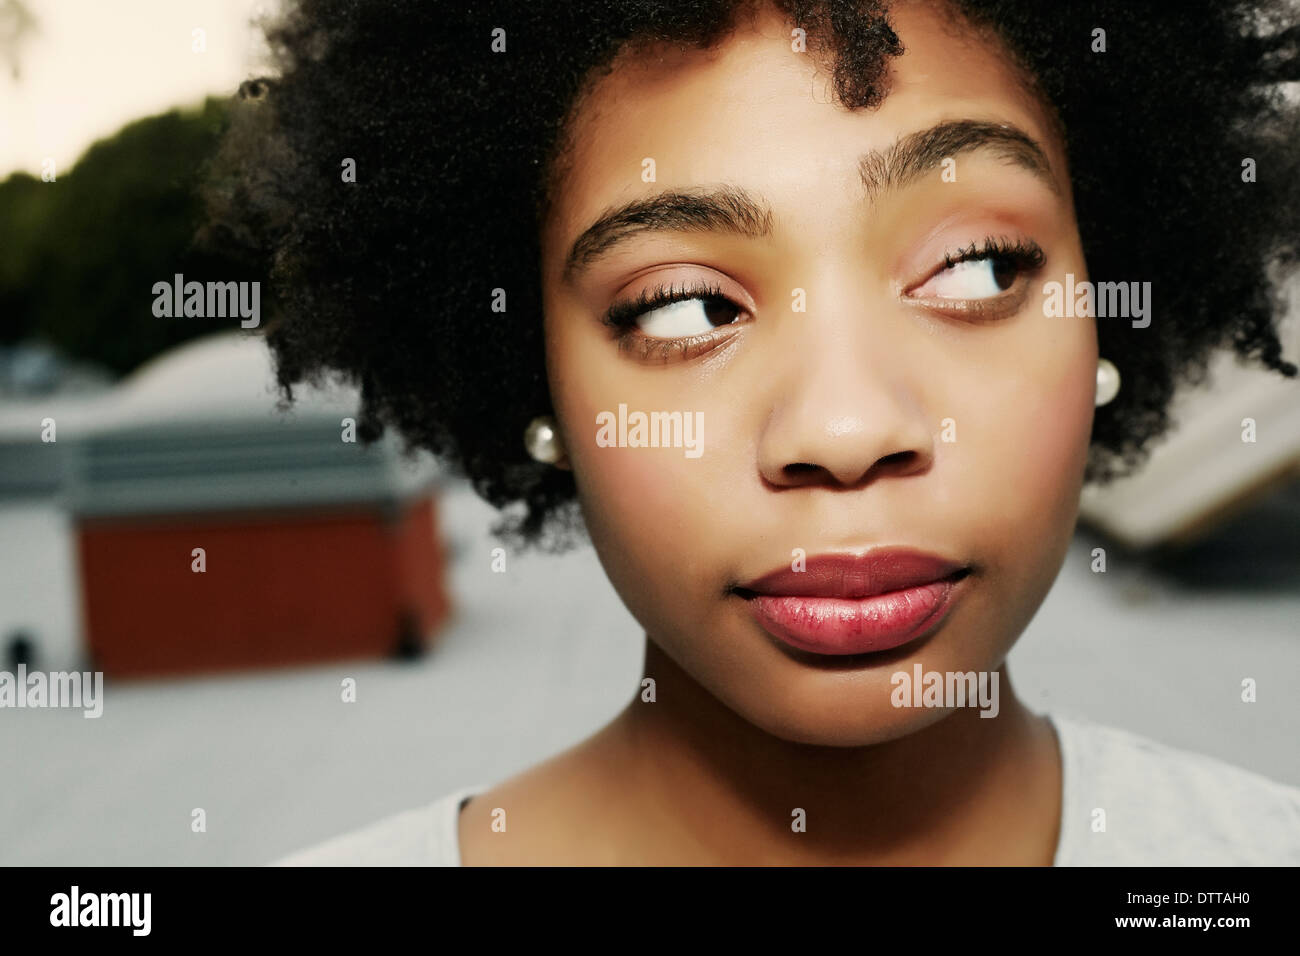 Mixed race woman arching an eyebrow Stock Photo